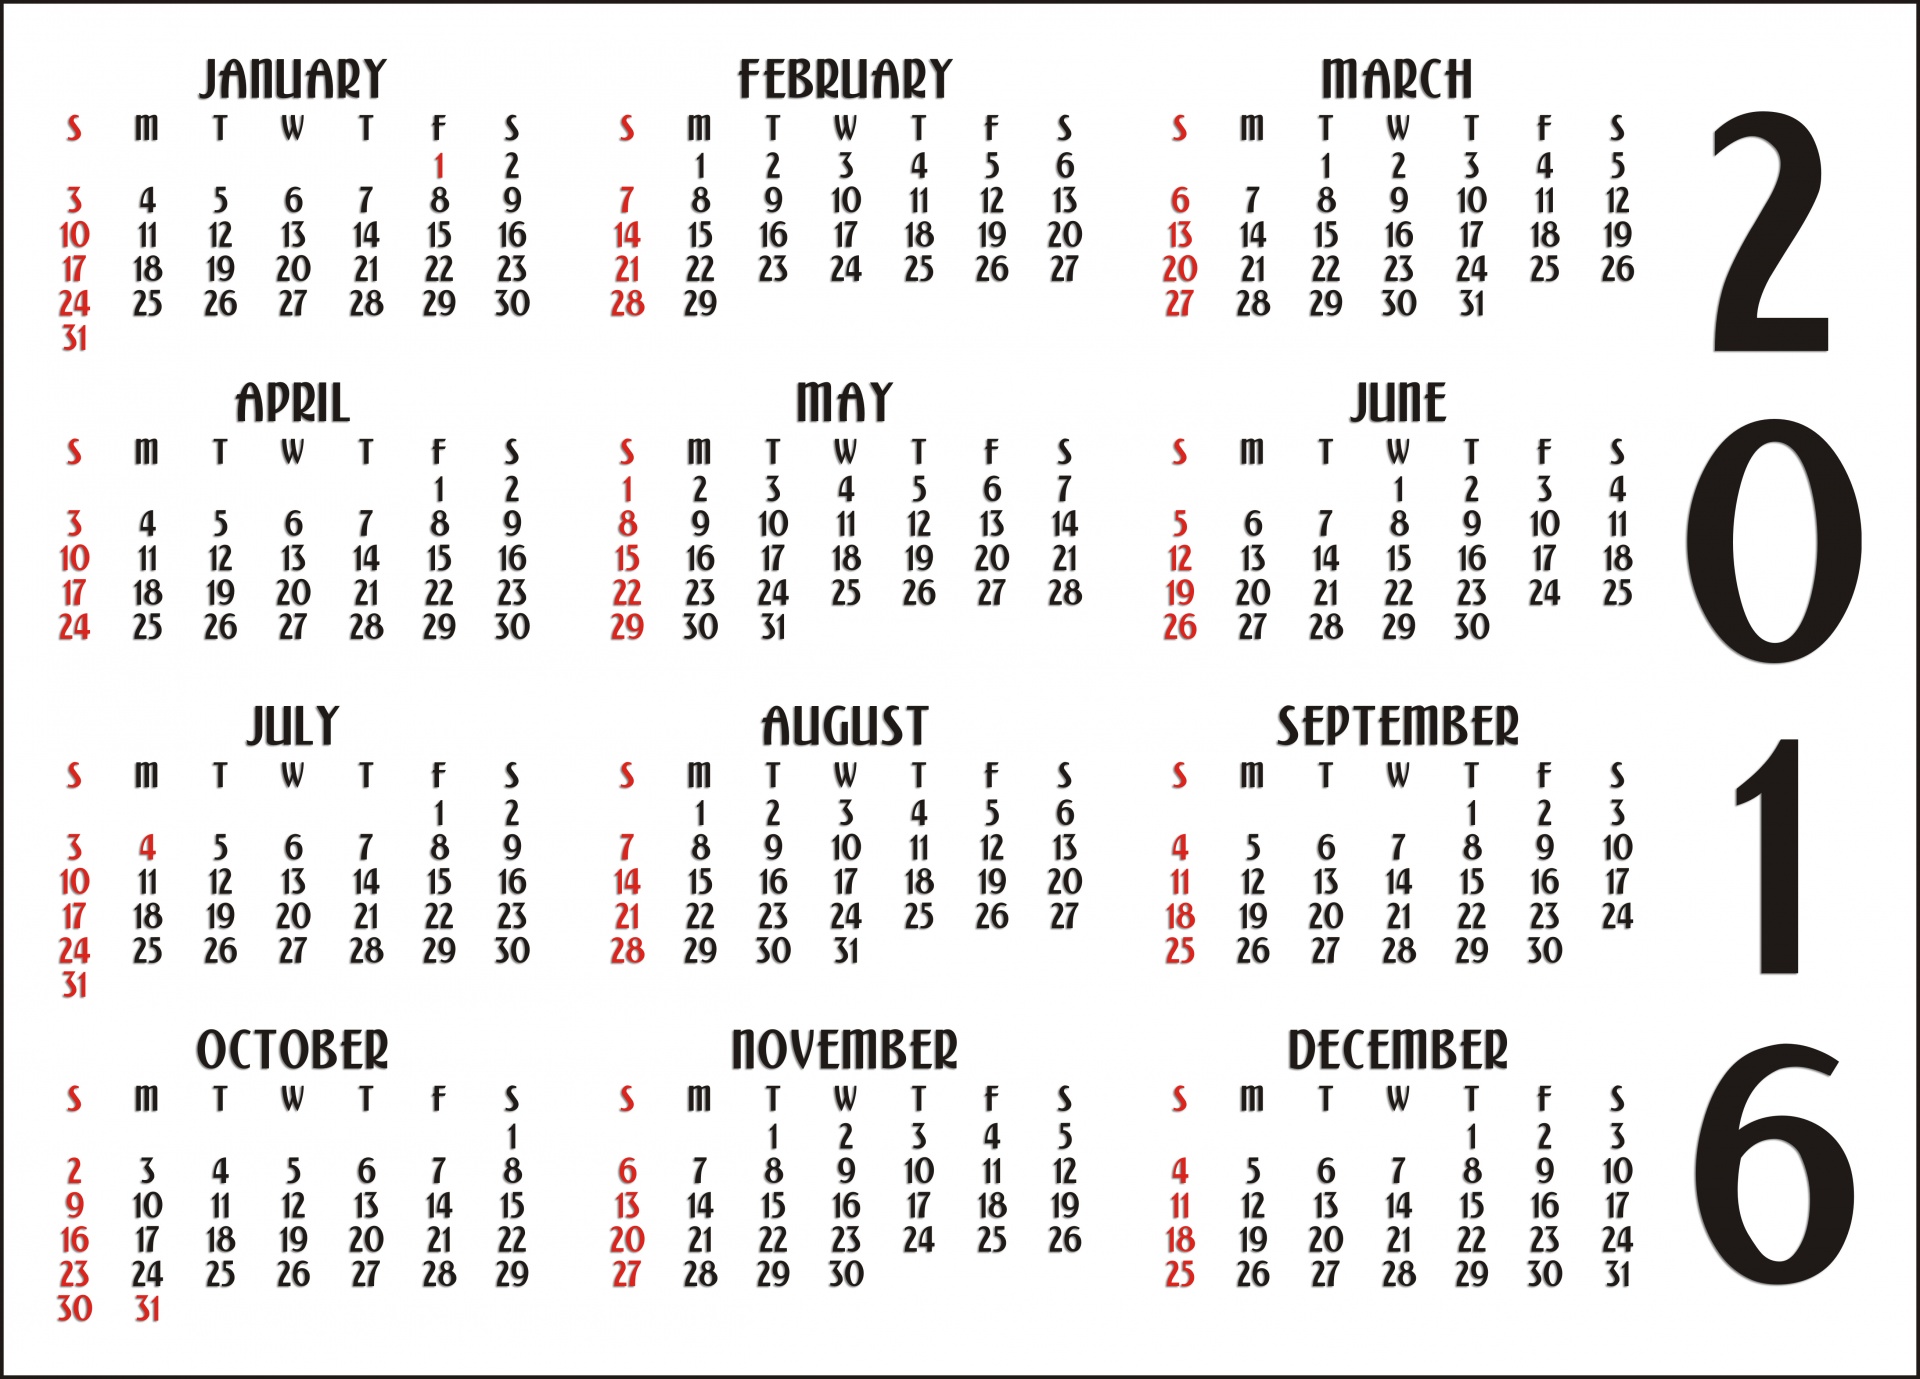 Calendar,2016 calendar,months,days,years free image from